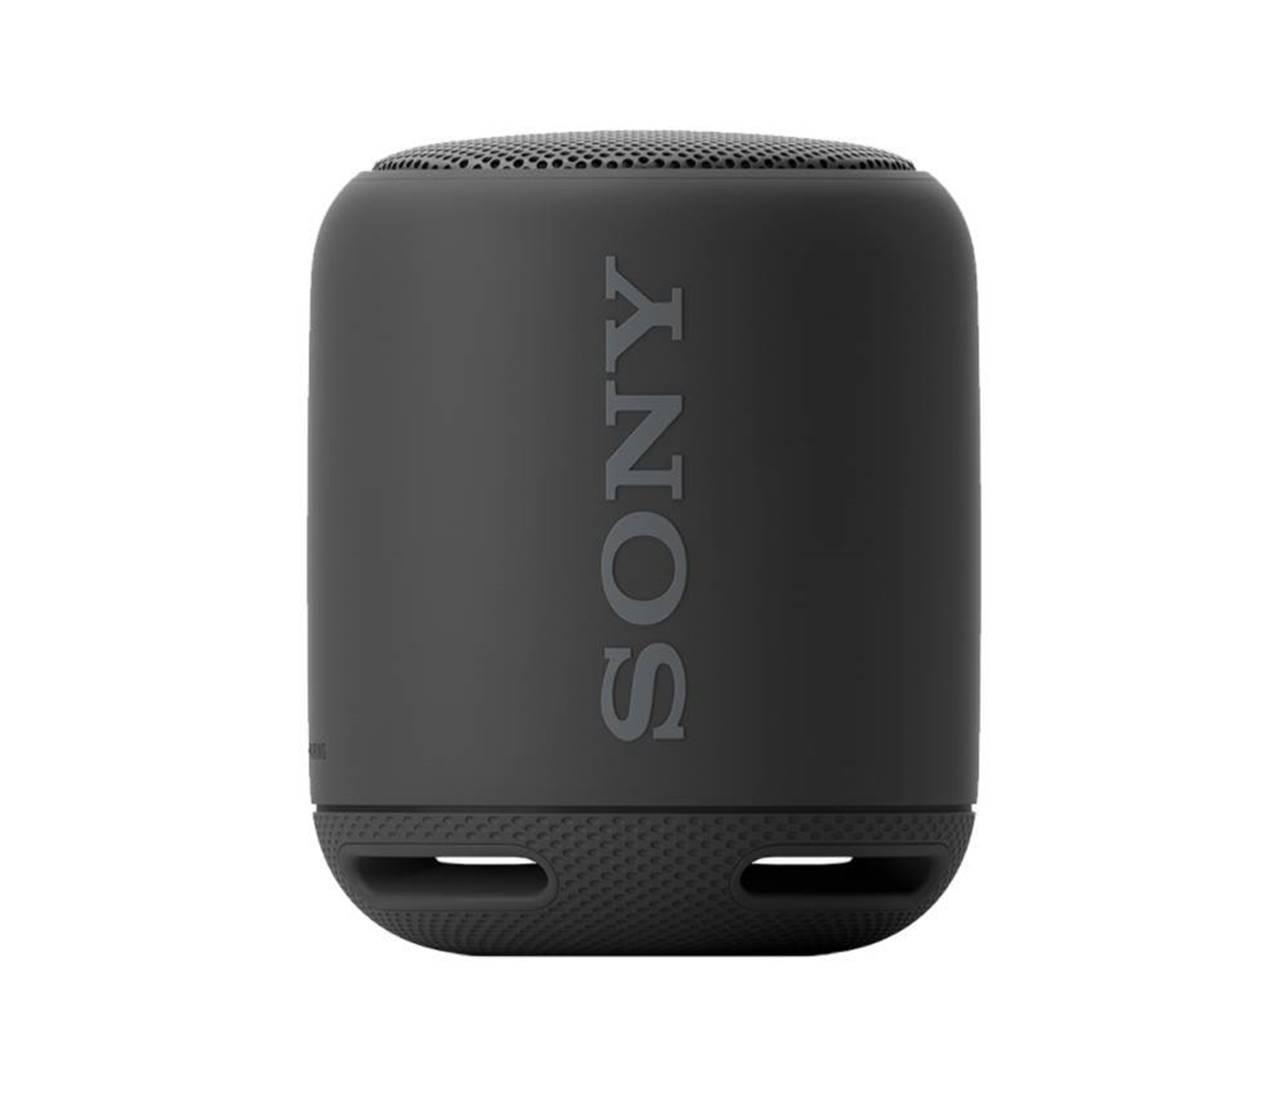 Sony XB10 Speaker